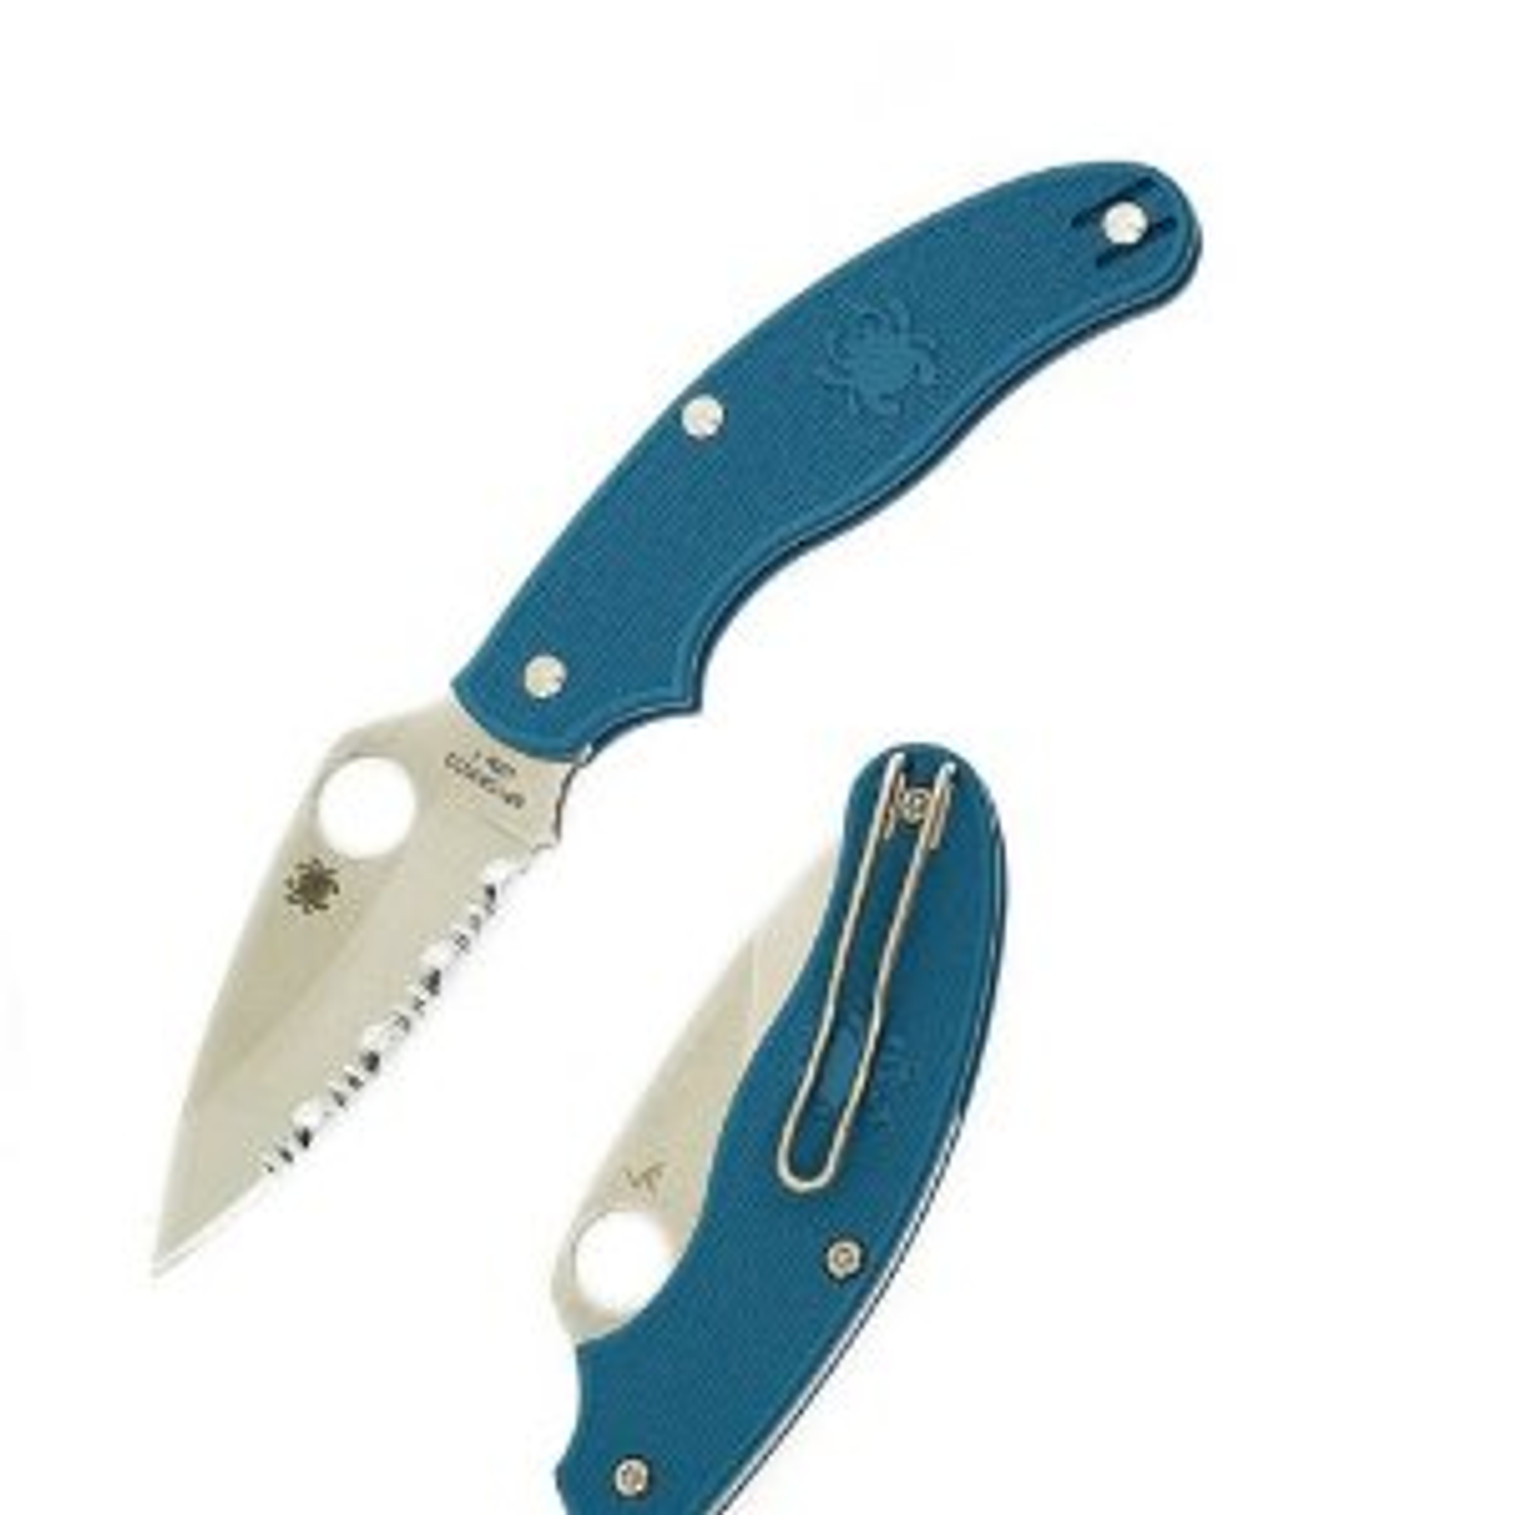 Spyderco UK Penknife Blue FRN Leaf Blade Combo Edge Folding Knife